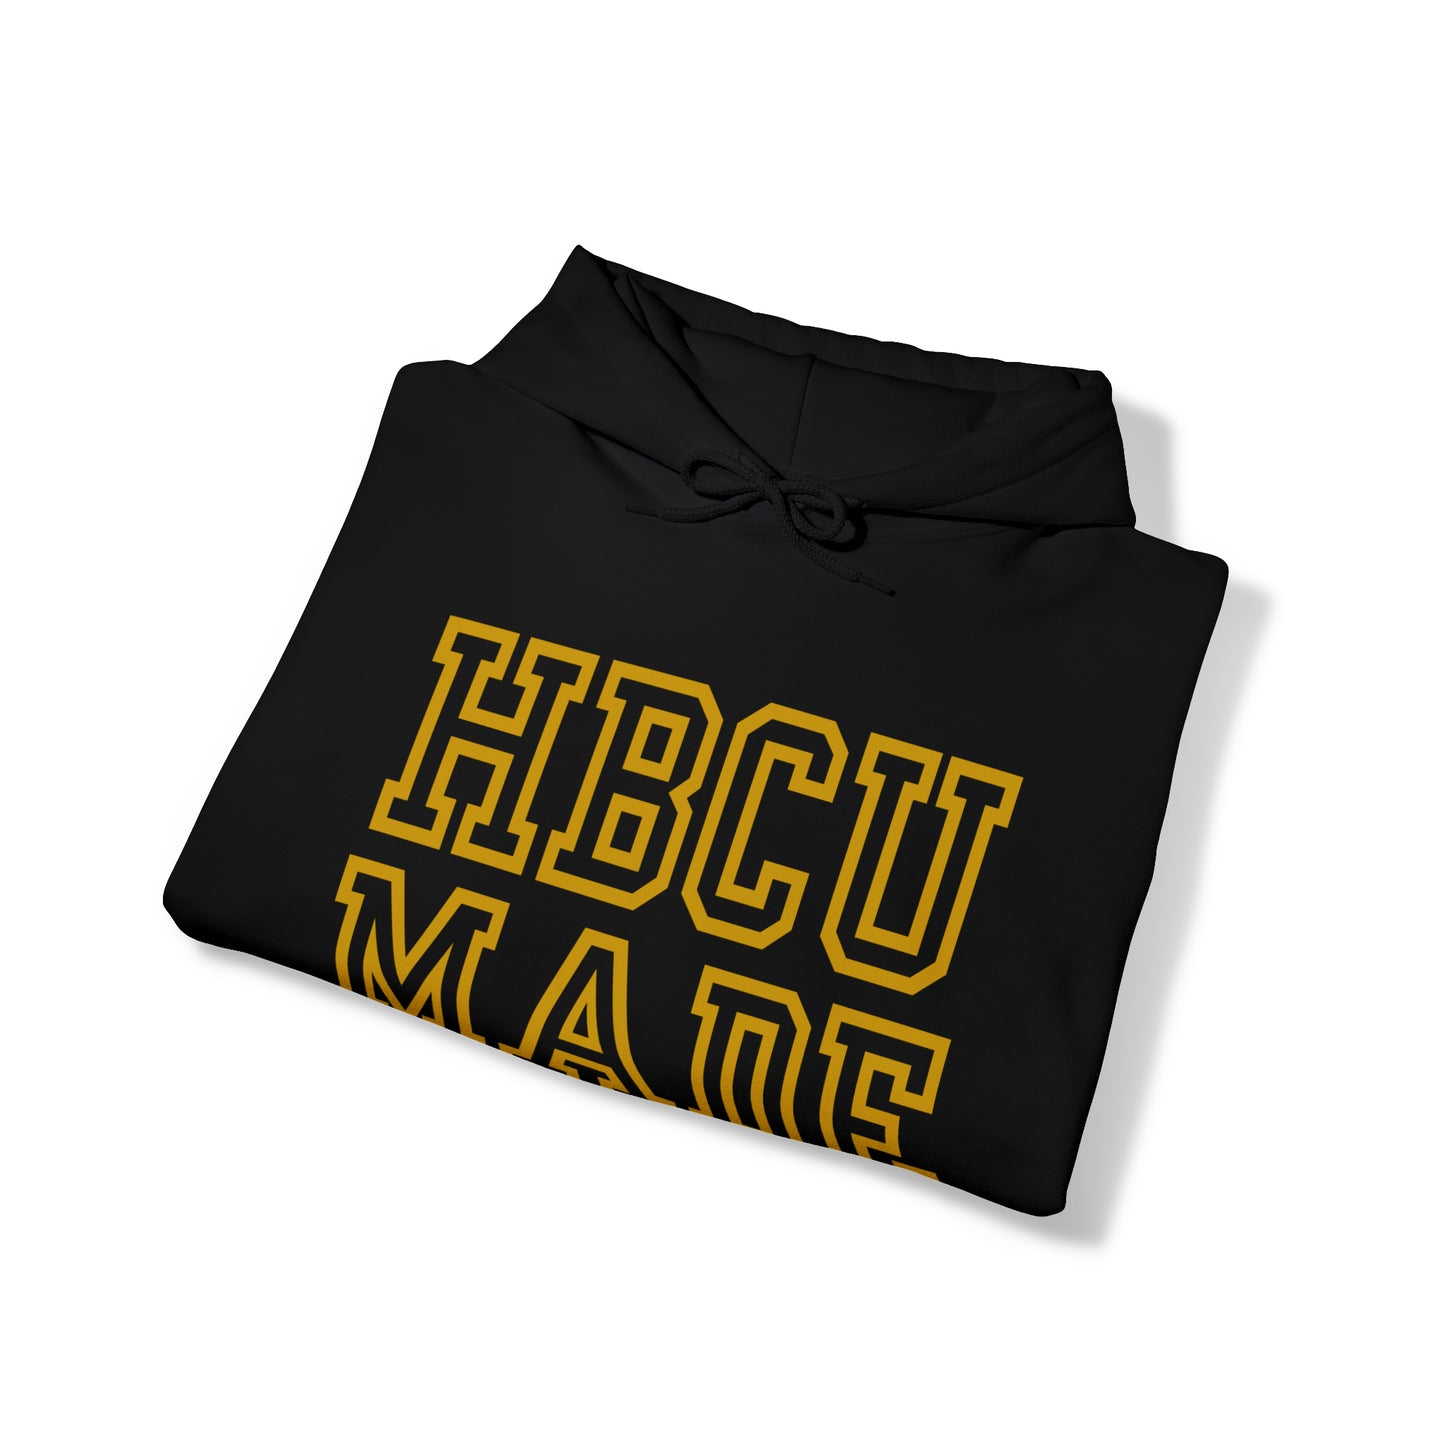 HBCU Made Golden Unisex Heavy Blend™ Hooded Sweatshirt